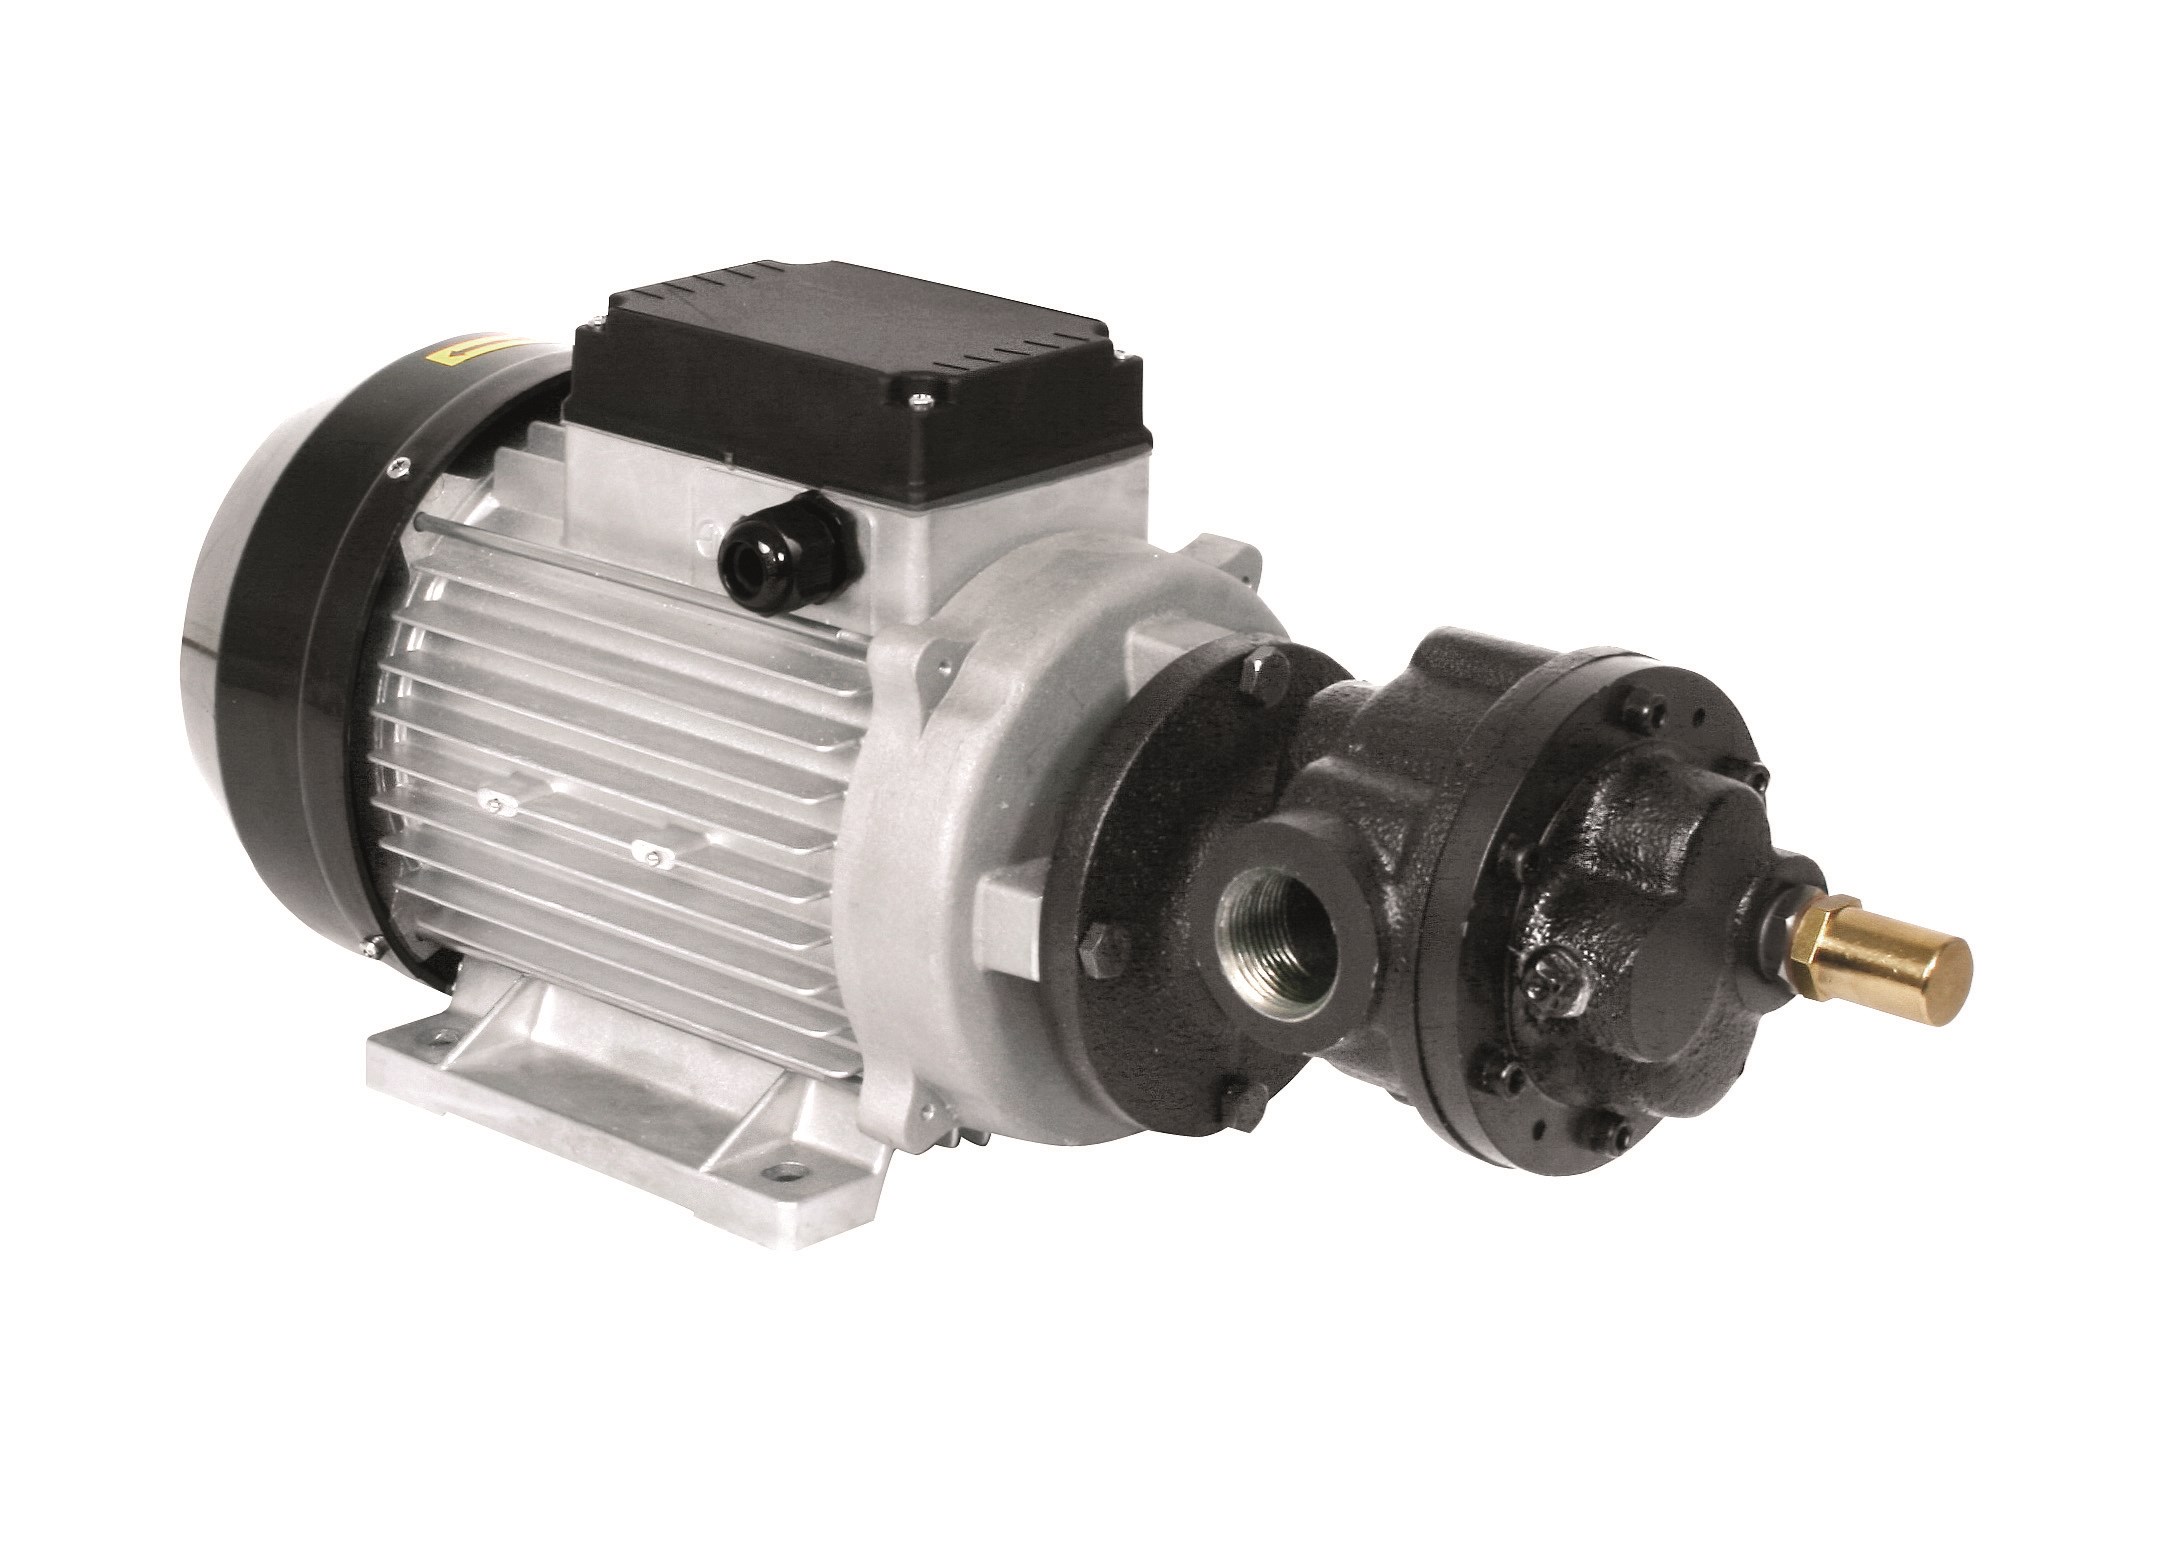 Electric oil pump 230V 70 L/min - Alentec & Orion AB